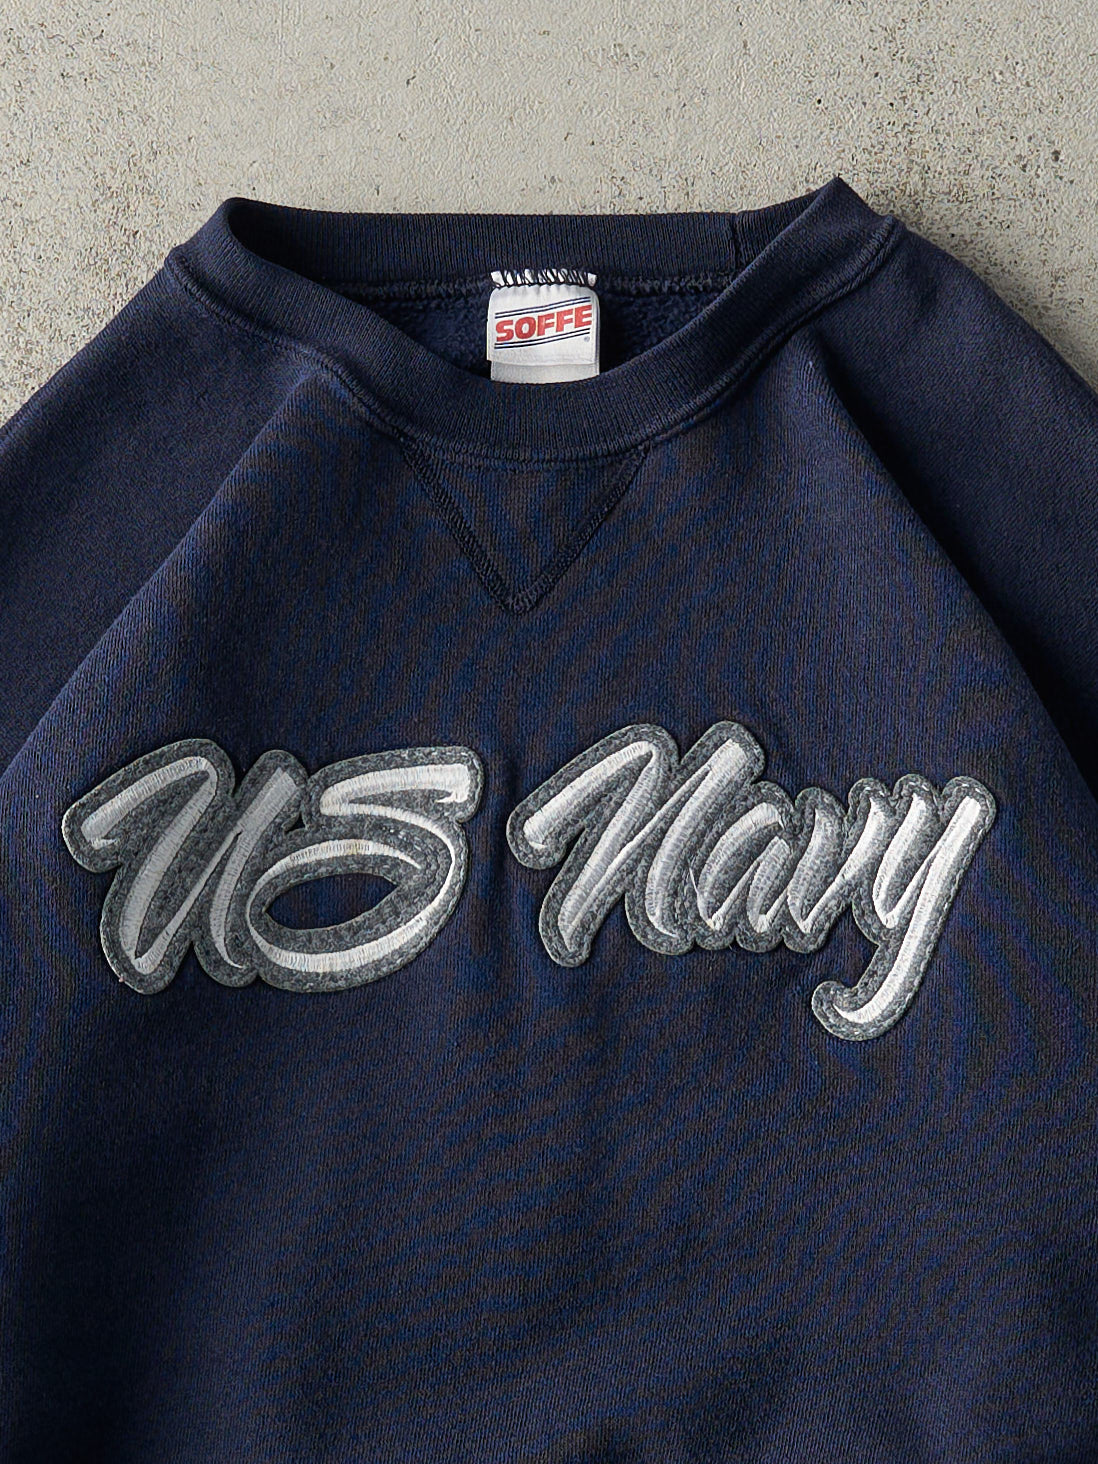 Vintage 90s Navy Blue Embroidered US Navy Boxy Crewneck (L)